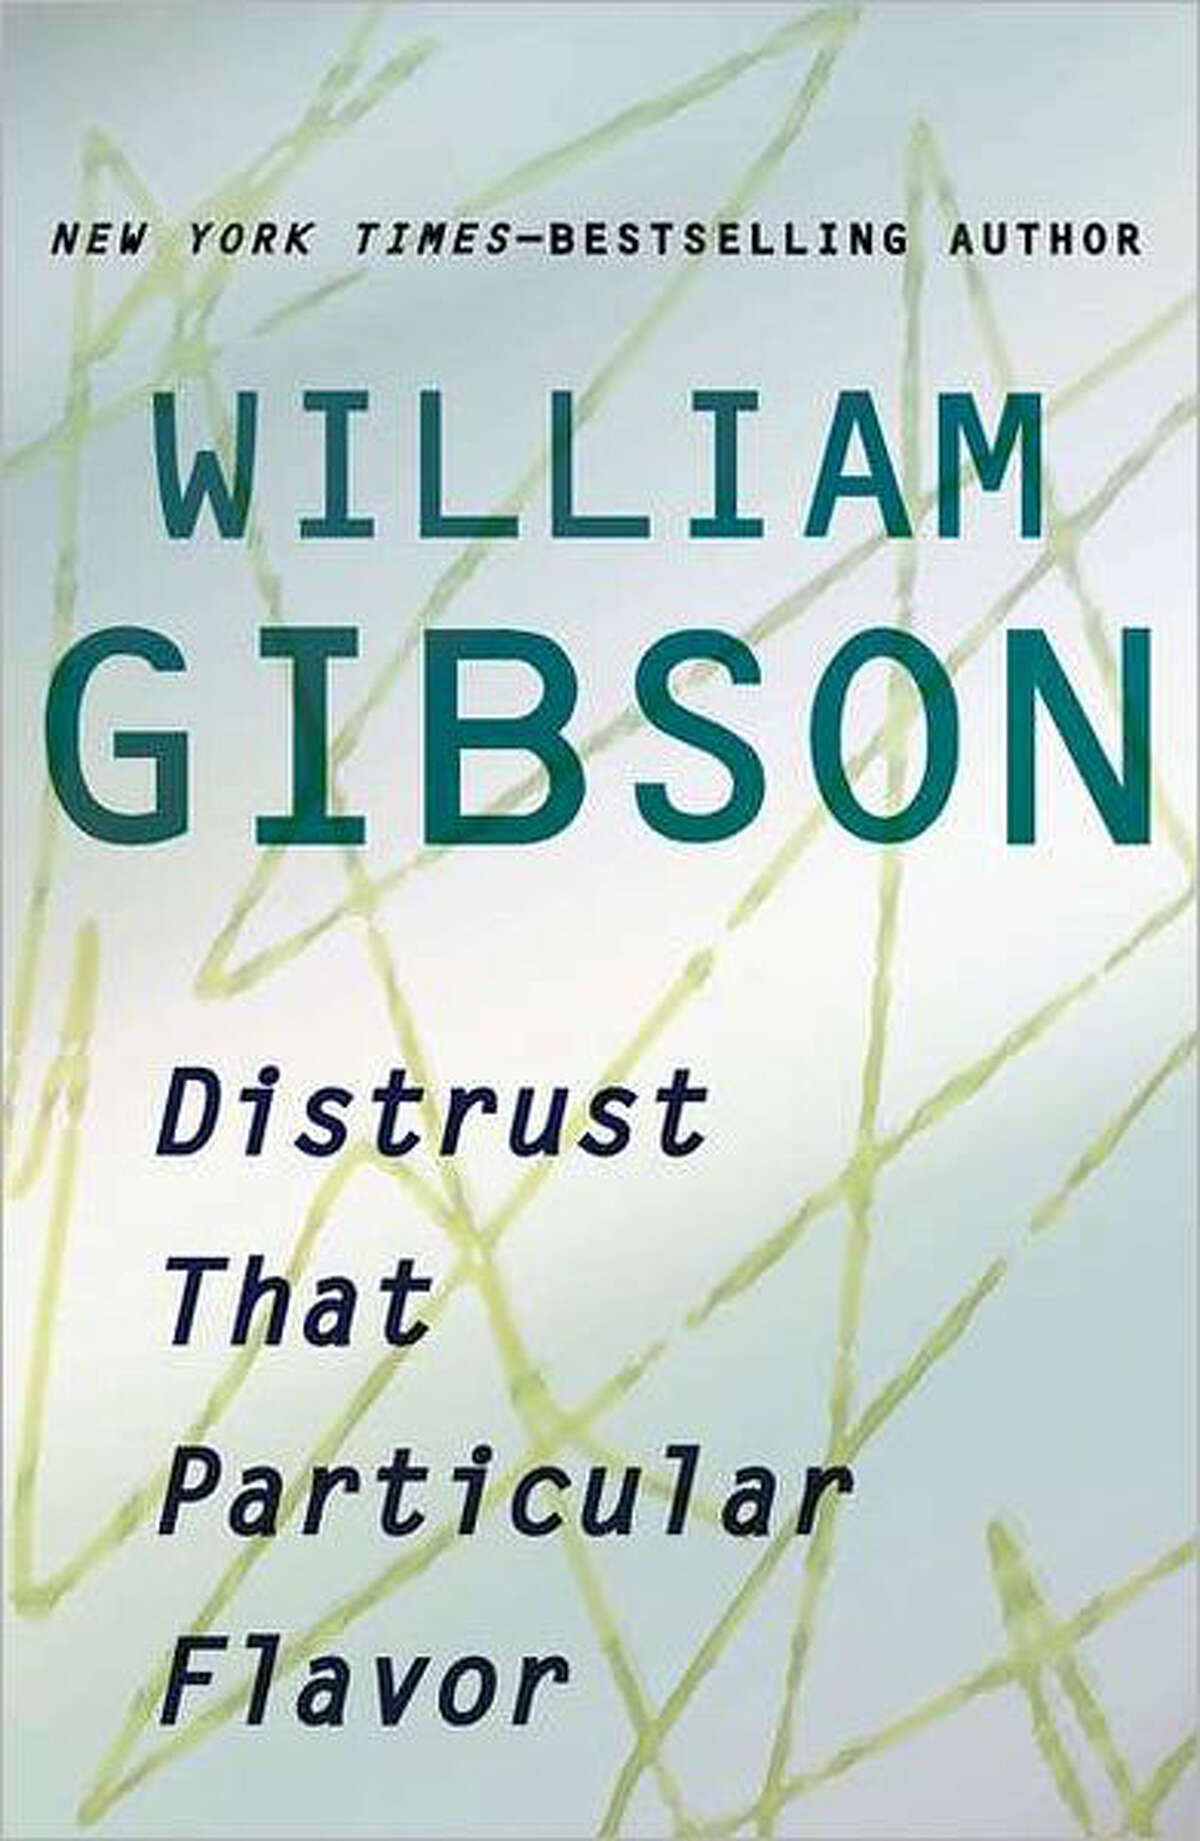 "Distrust That Particular Flavor" by William Gibson